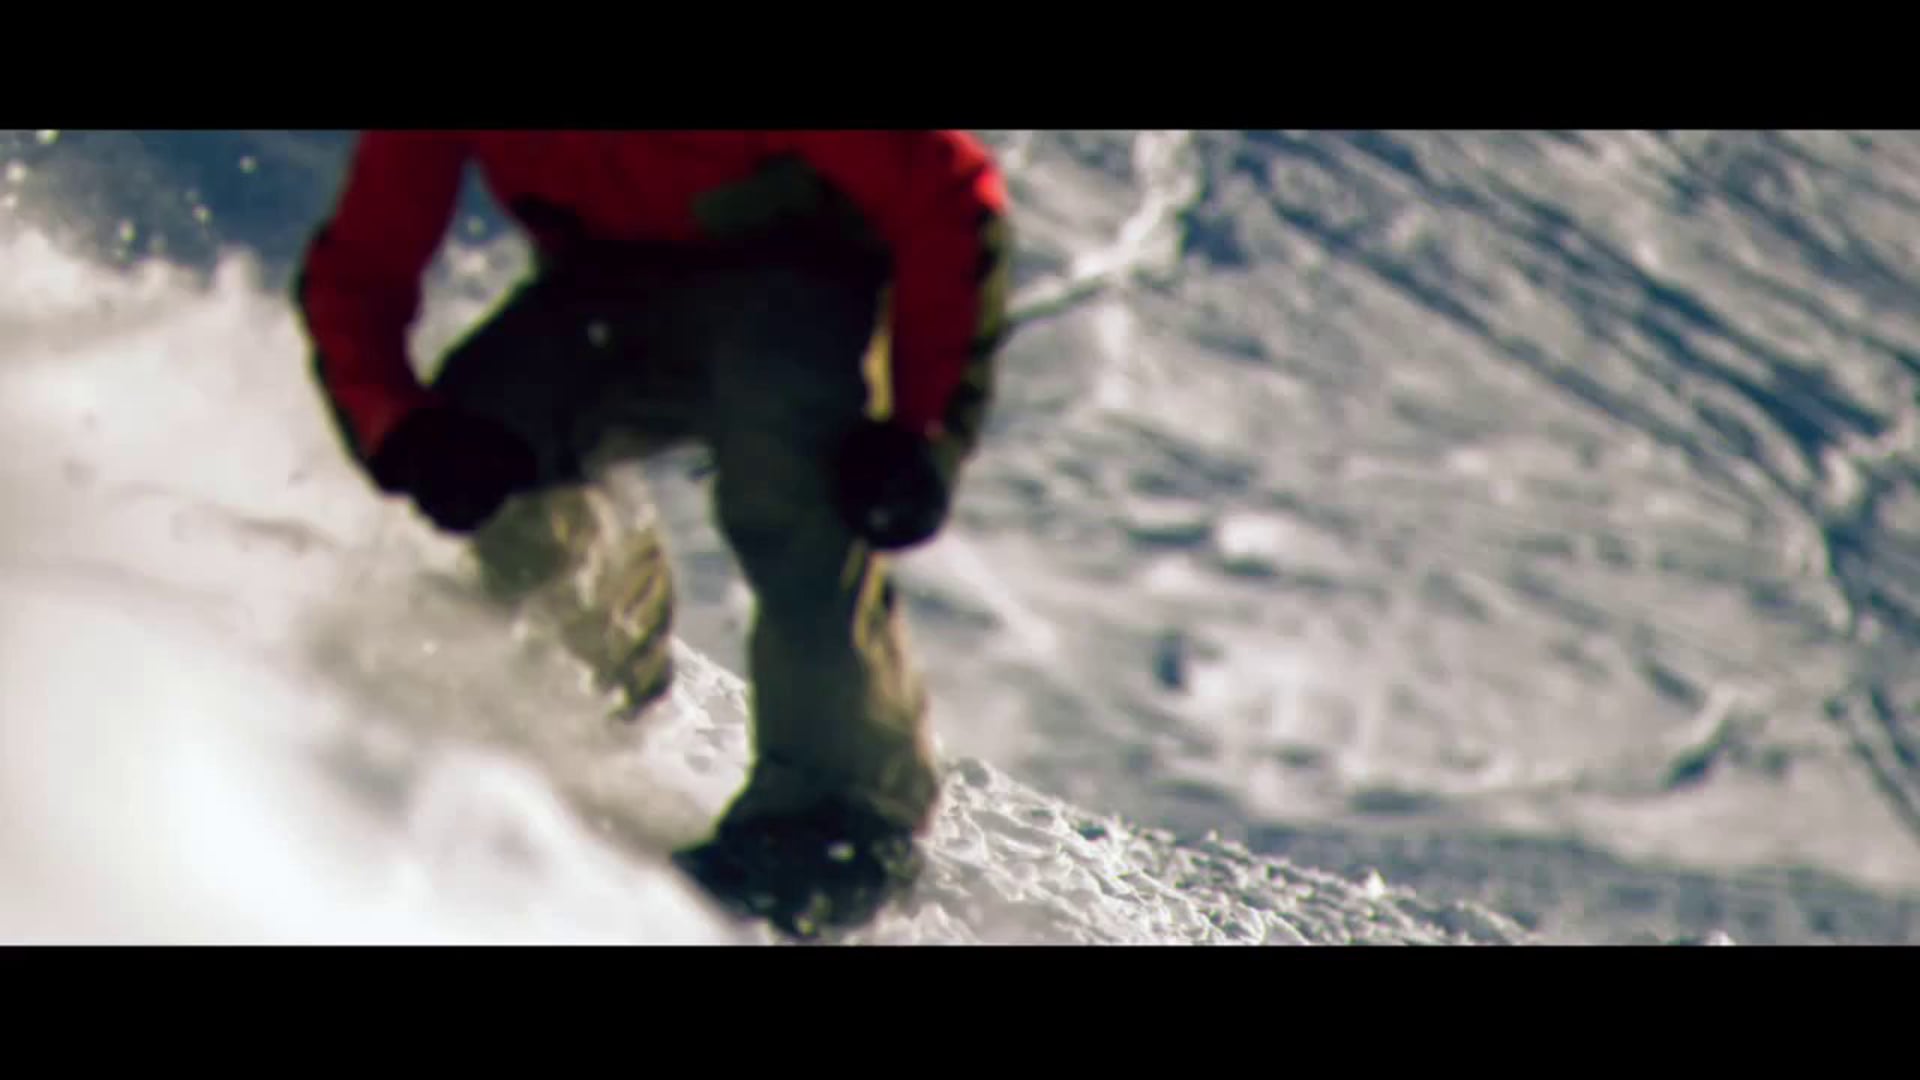 Nokia/Burton/Push Snowboard R&D Film 1 "Speed."